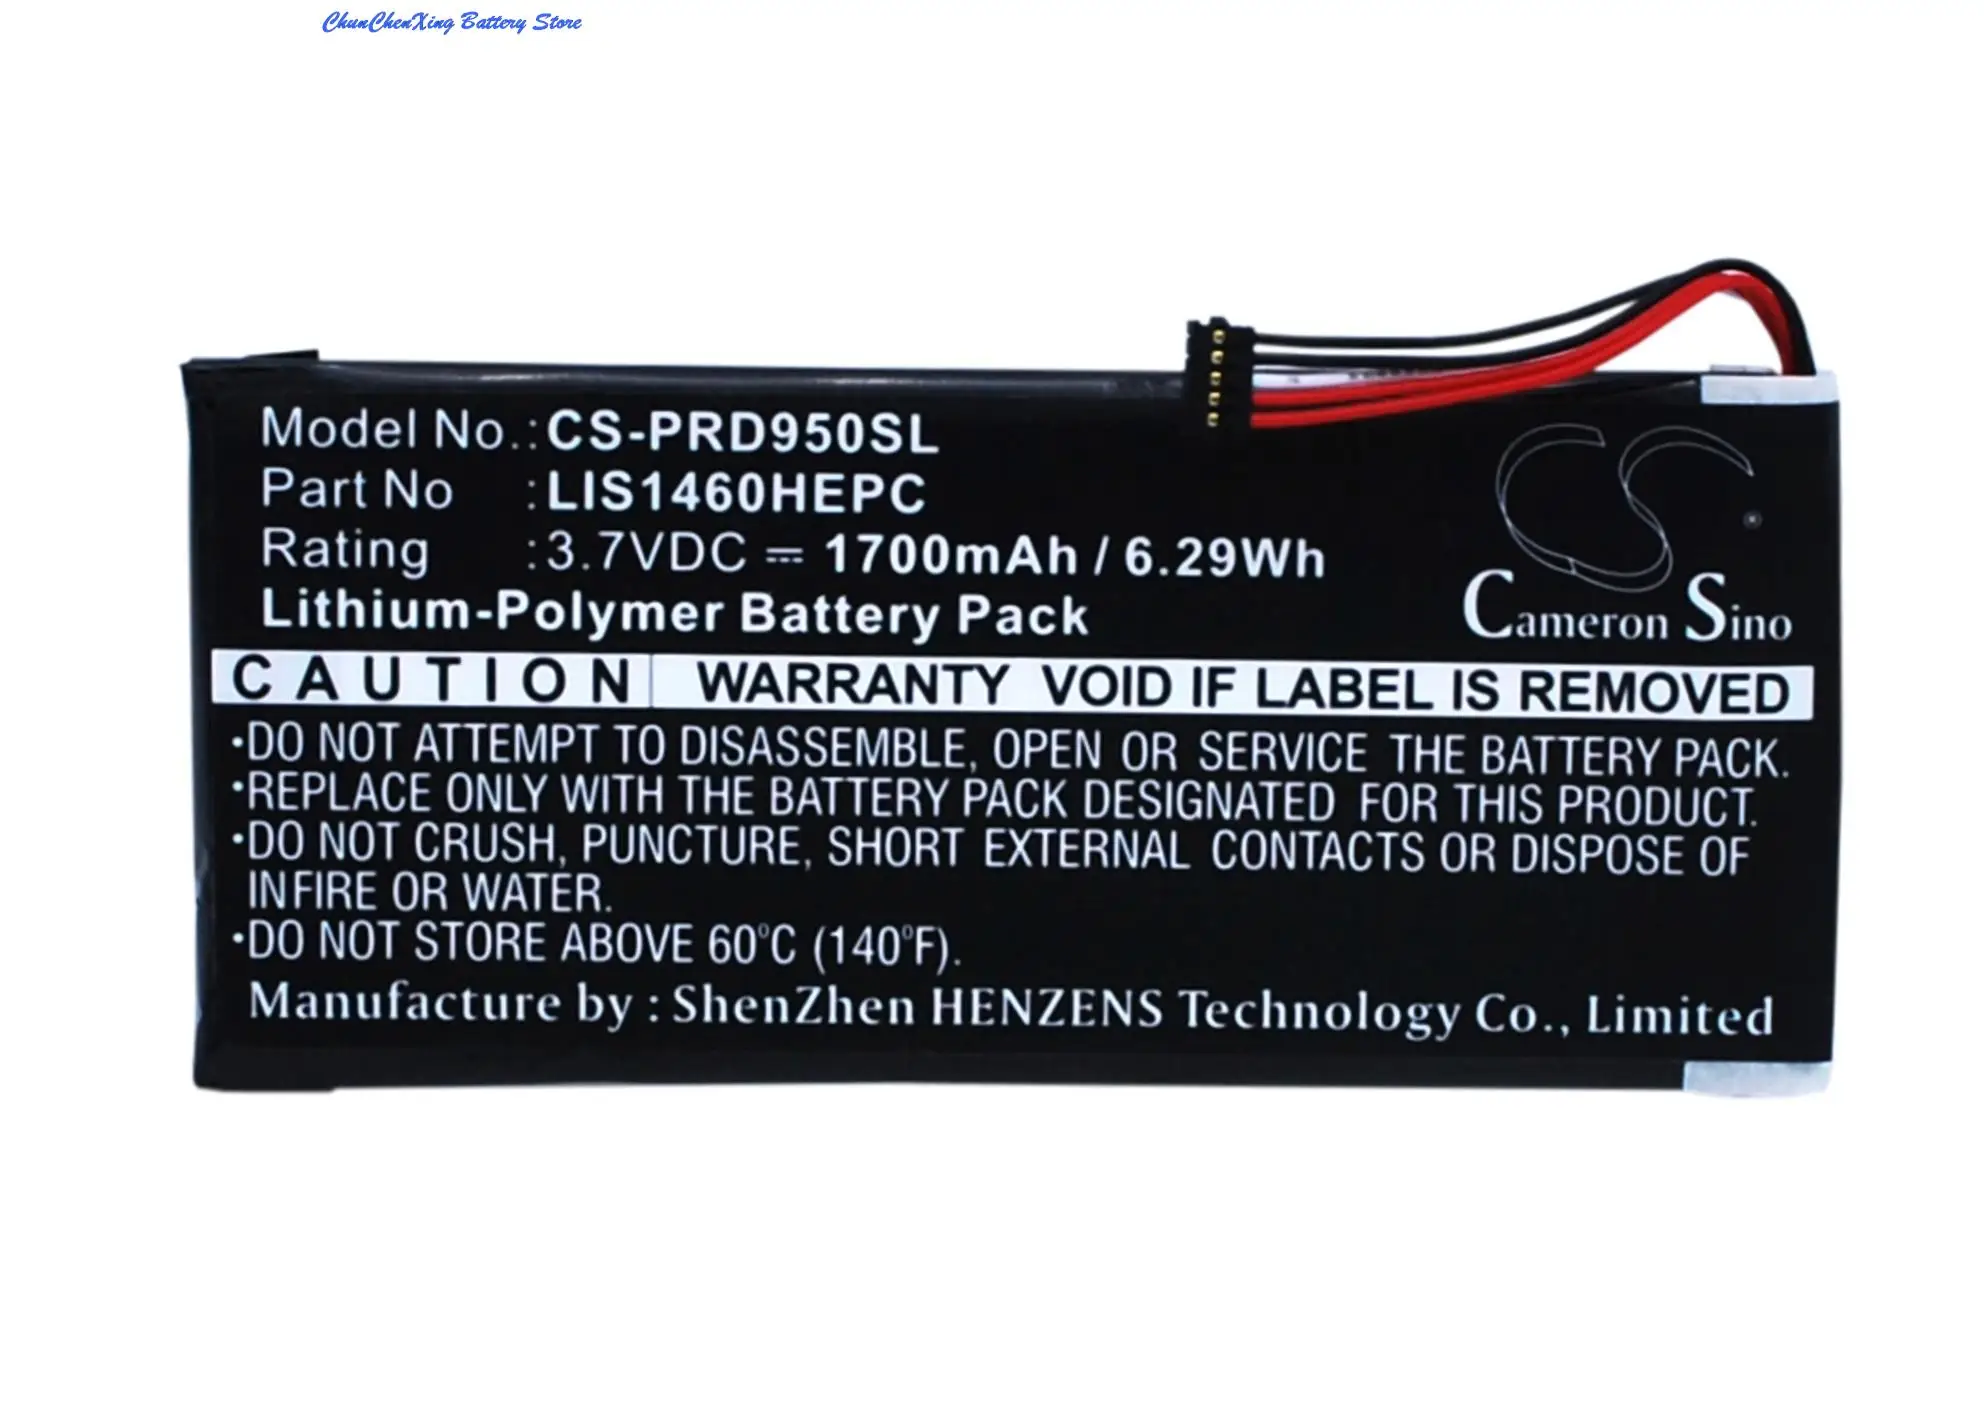 

Cameron Sino 1700mAh Battery 1-853-020-11, LIS1460HEPC, LIS1460HEPC(SY6) for Sony PRS-950, PRS-950SC